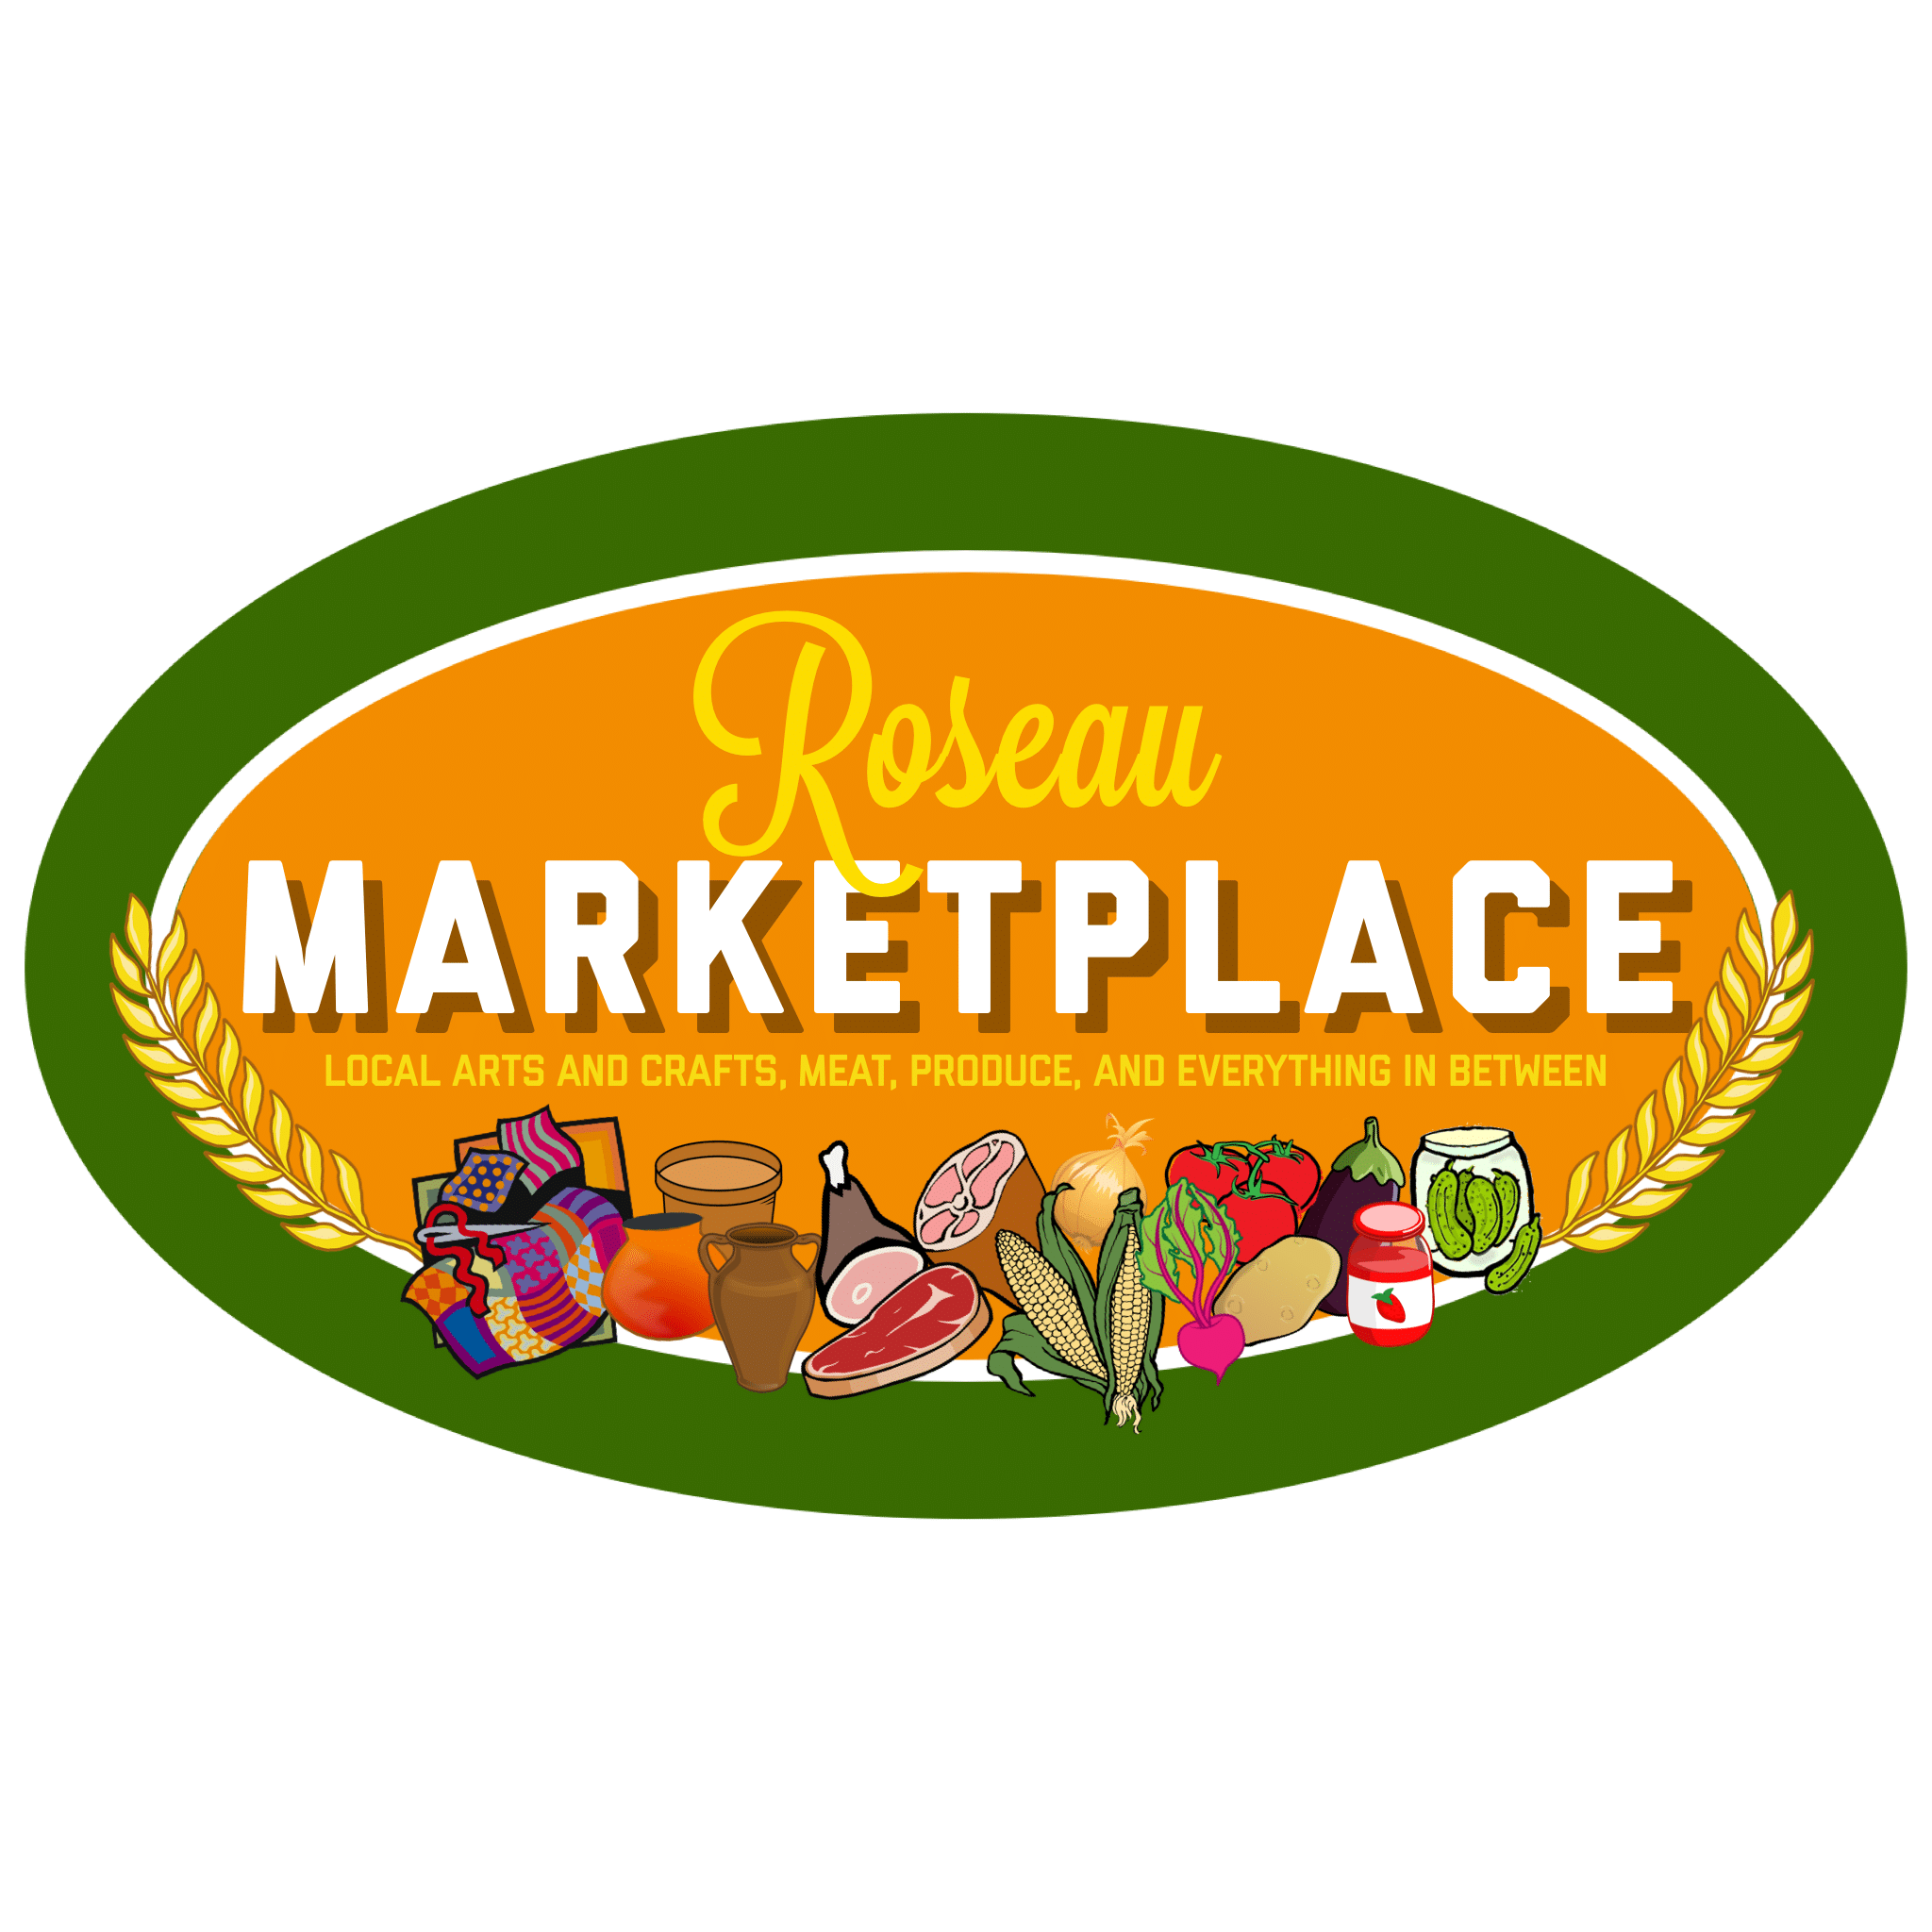 roseau market place logo